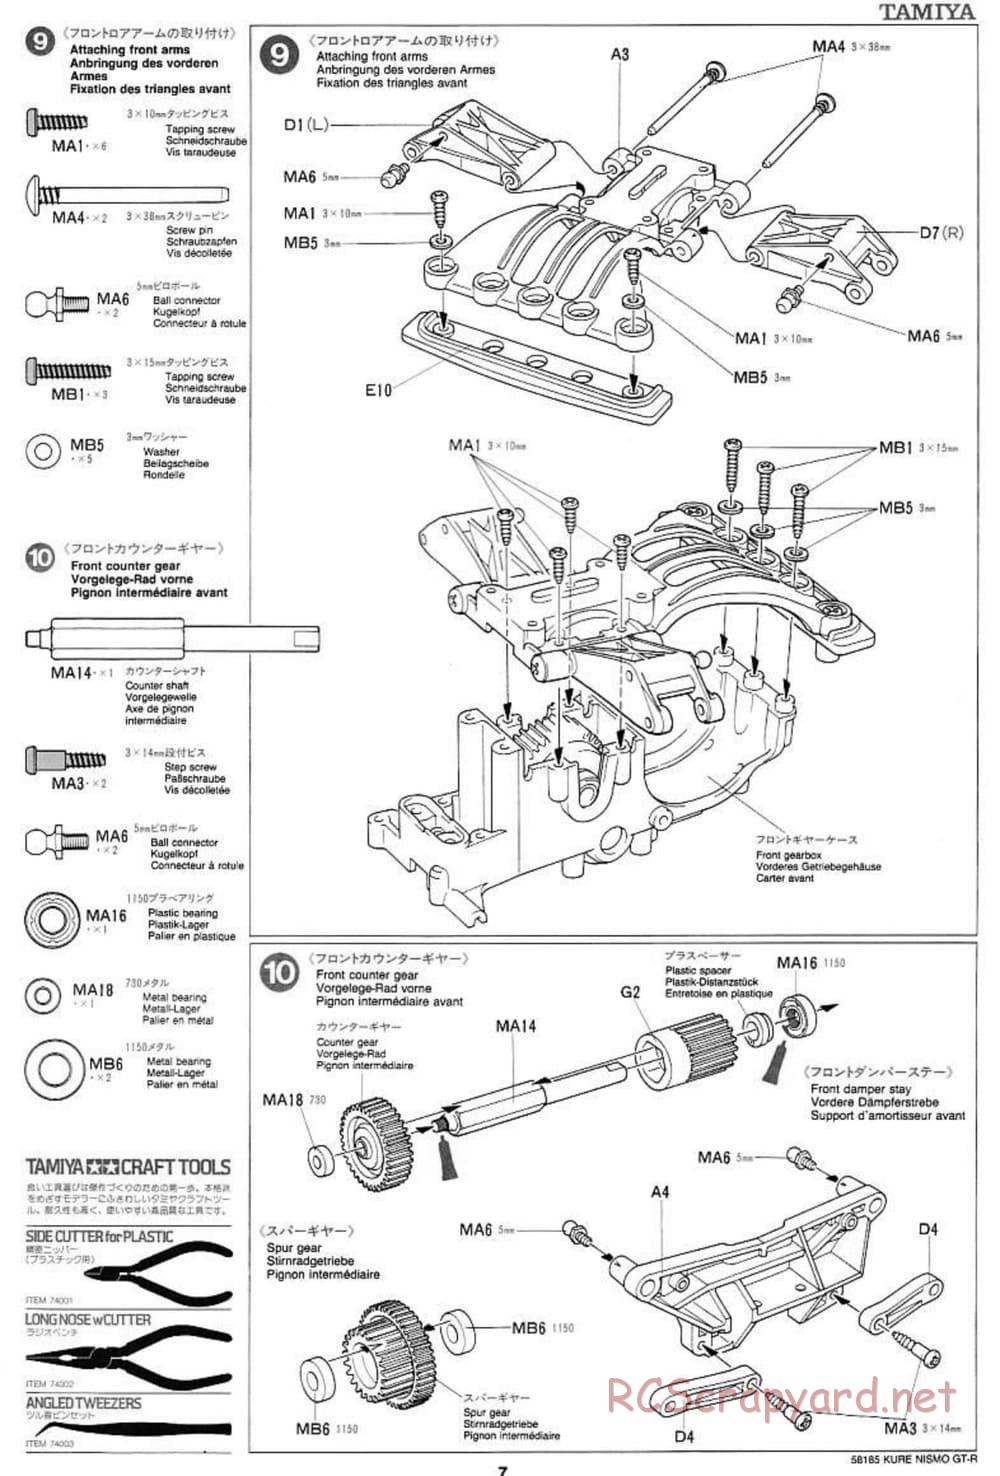 Tamiya - Kure Nismo GT-R - TA-03F Chassis - Manual - Page 7